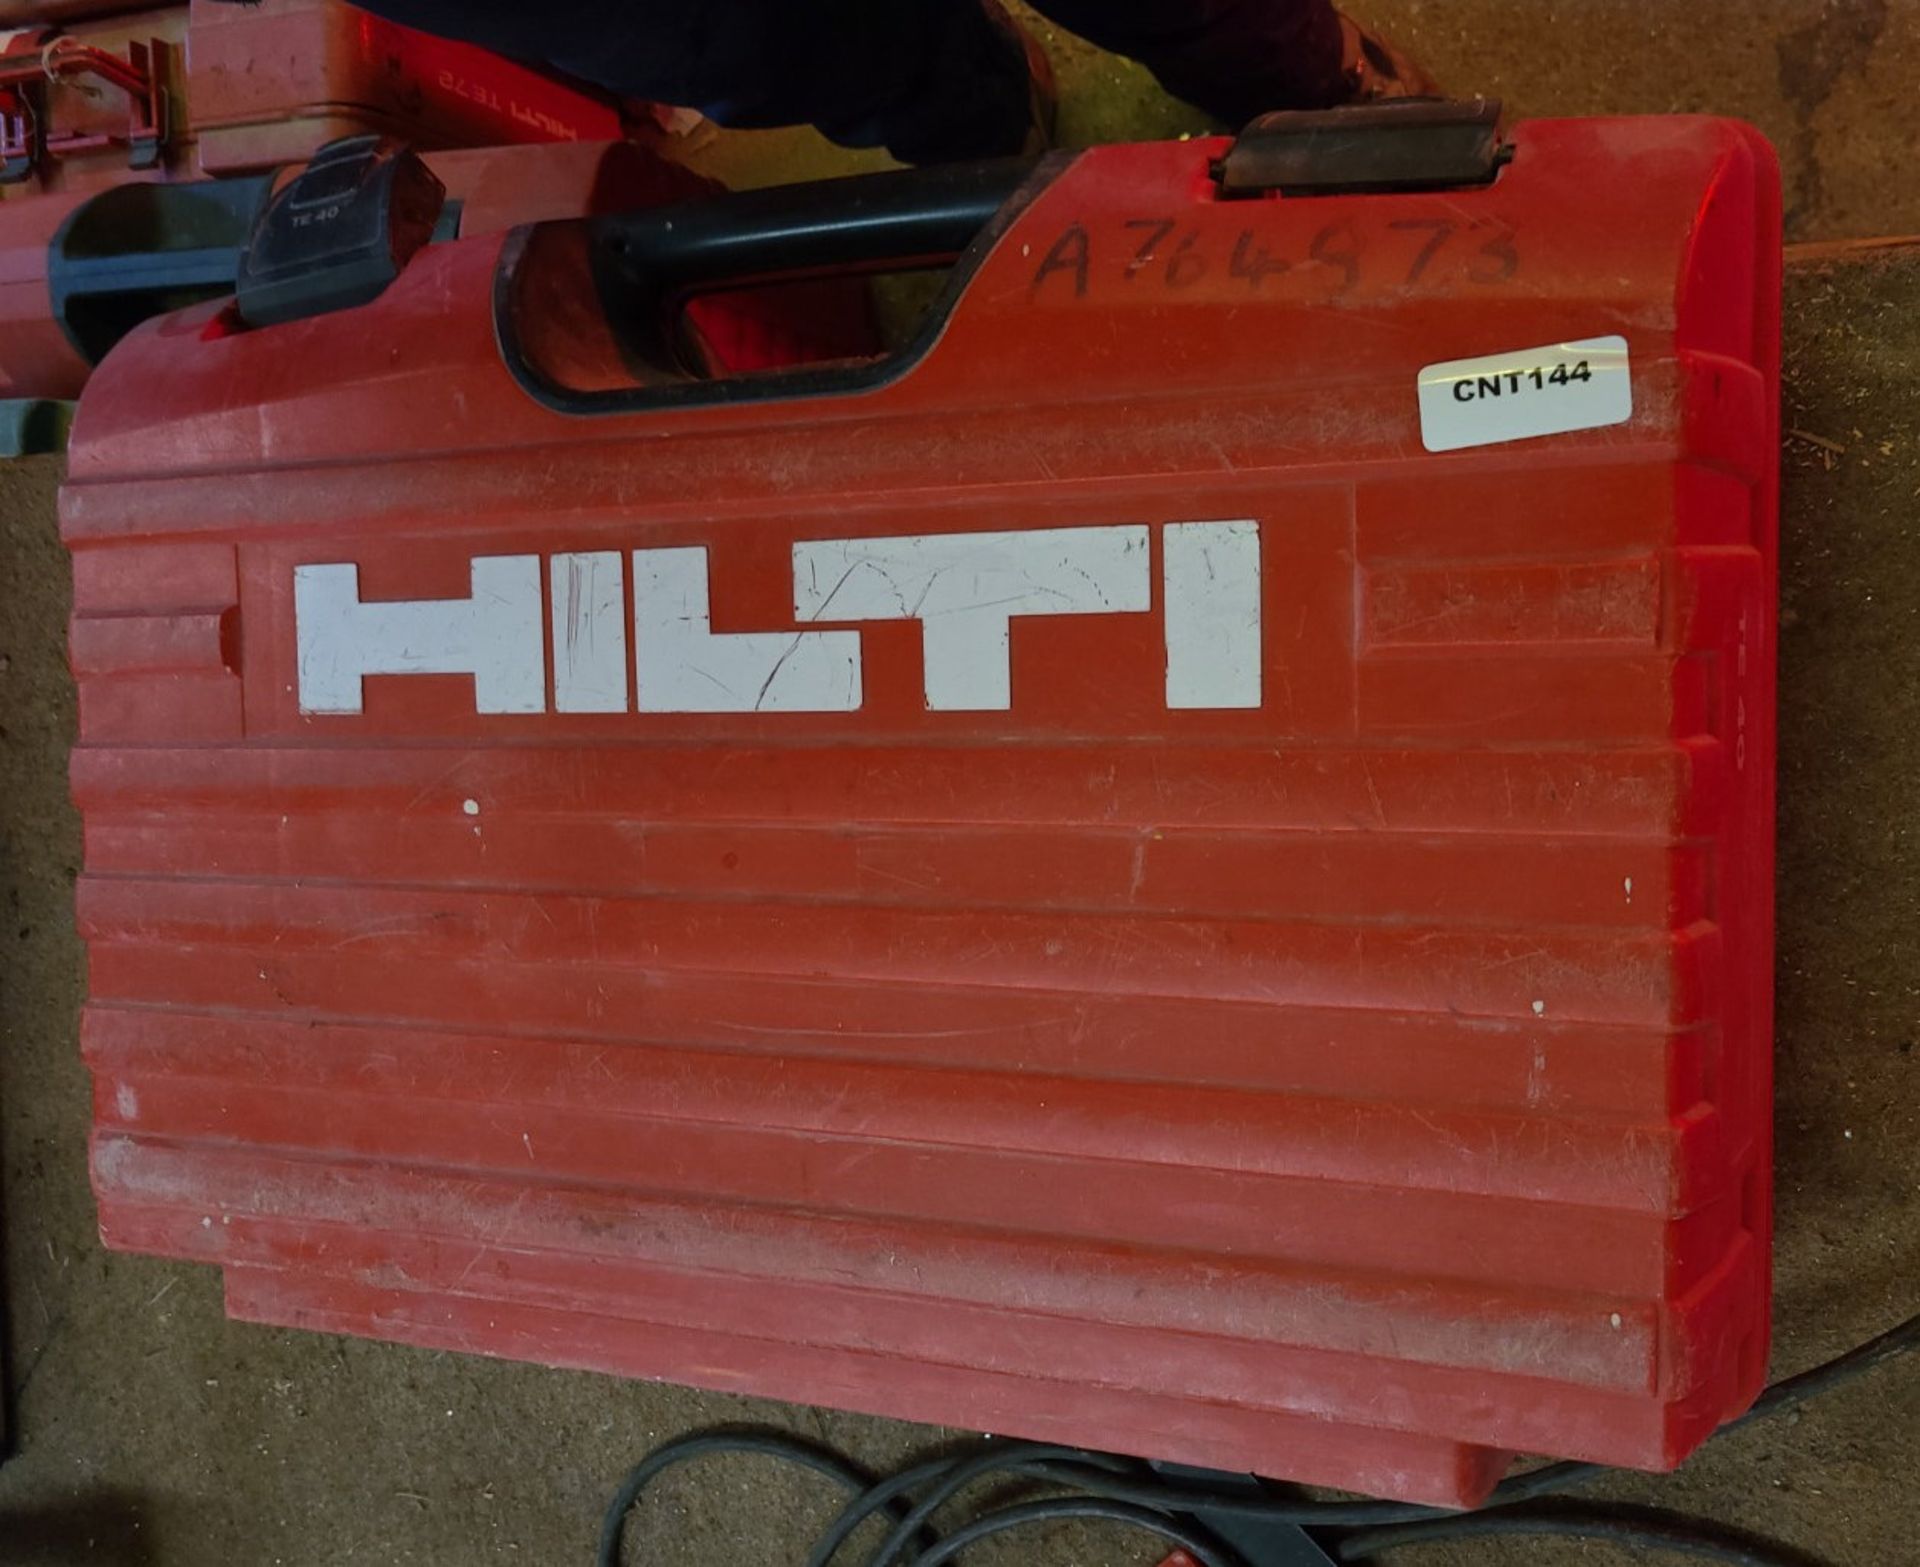 1 x Hilti TE40-Avr Combi Hammer Drill In Case - Ref: CNT144 - CL846 - Location: Oxford OX2 - Image 5 of 5